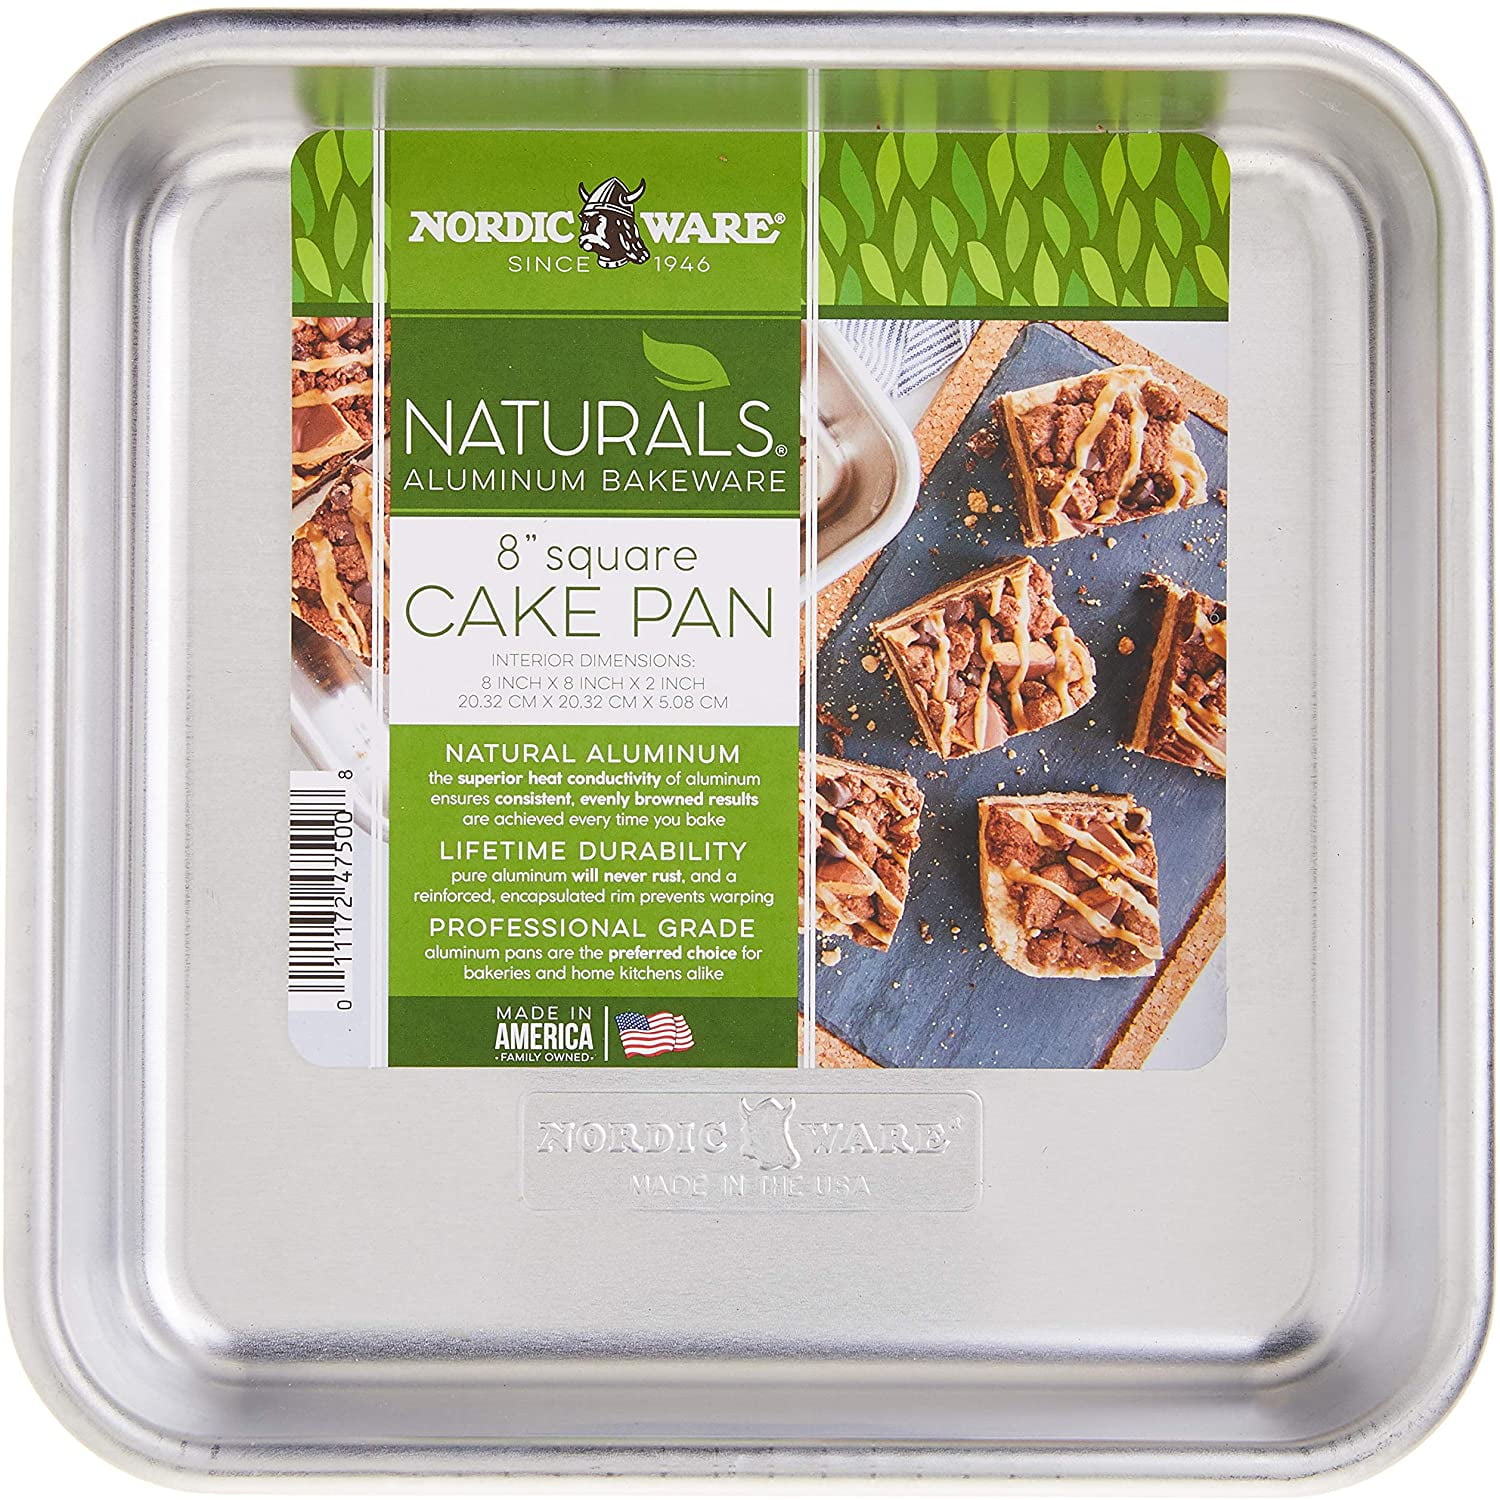 Naturals 8”x8” Square Aluminum Cake Pan, Nordic Ware